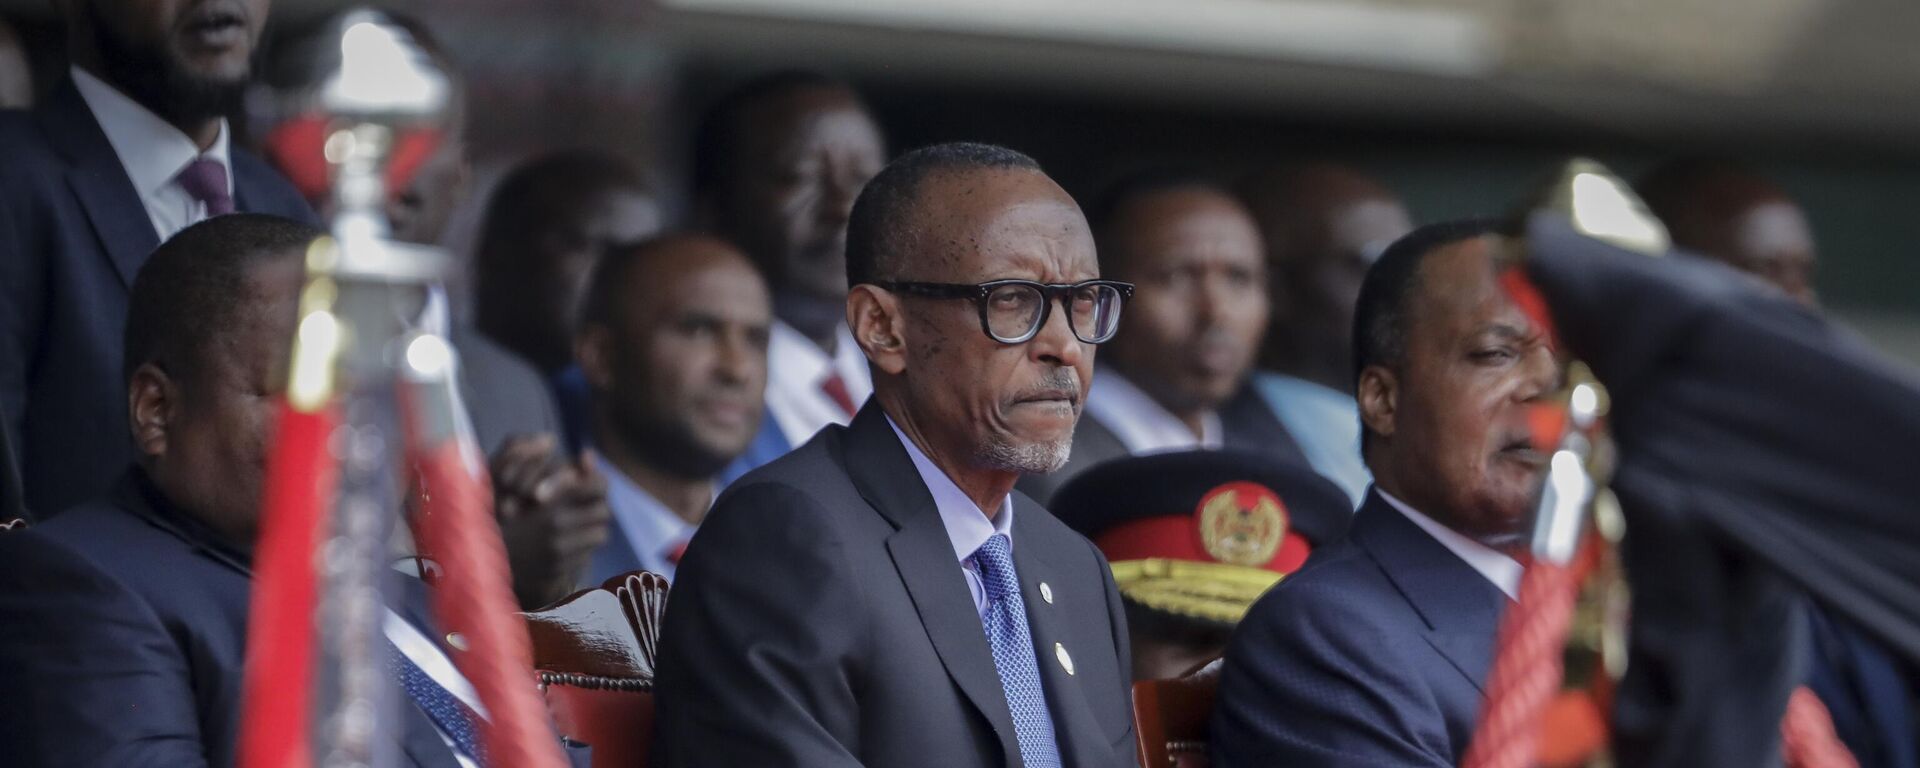 Rwanda's President Paul Kagame attends the swearing-in ceremony for Kenya's new president William Ruto, at Kasarani stadium in Nairobi, Kenya Tuesday, Sept. 13, 2022.  - Sputnik International, 1920, 20.12.2022